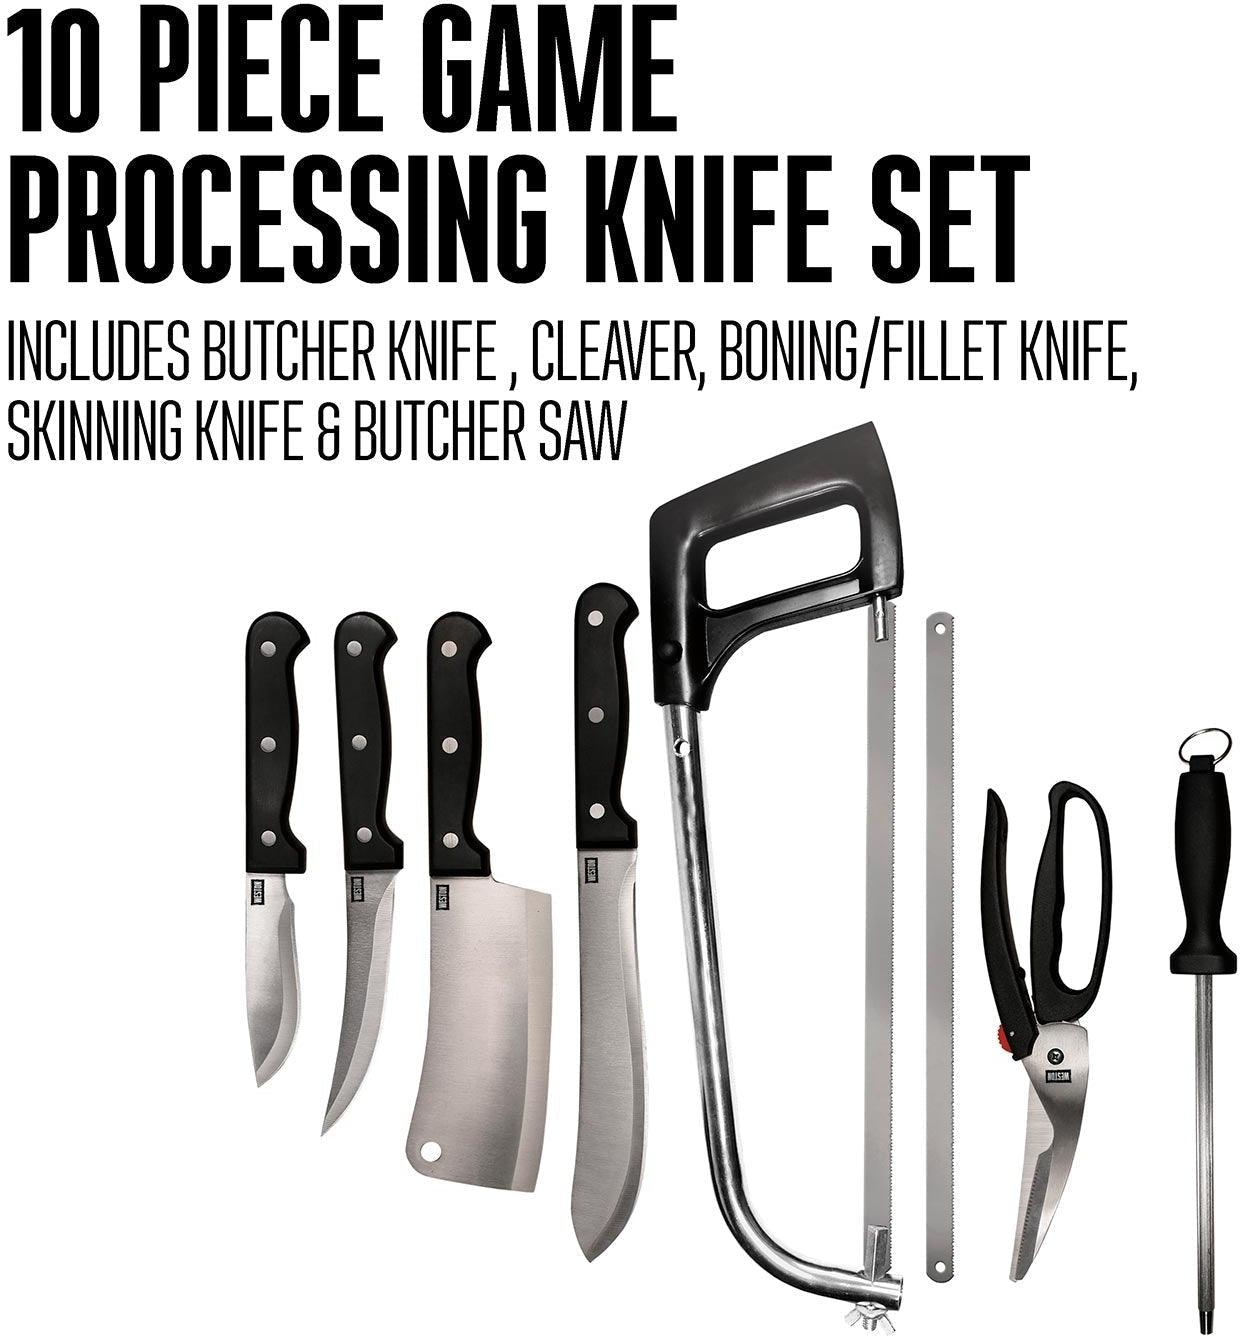 Weston Game Processing Knife 10 Piece Set